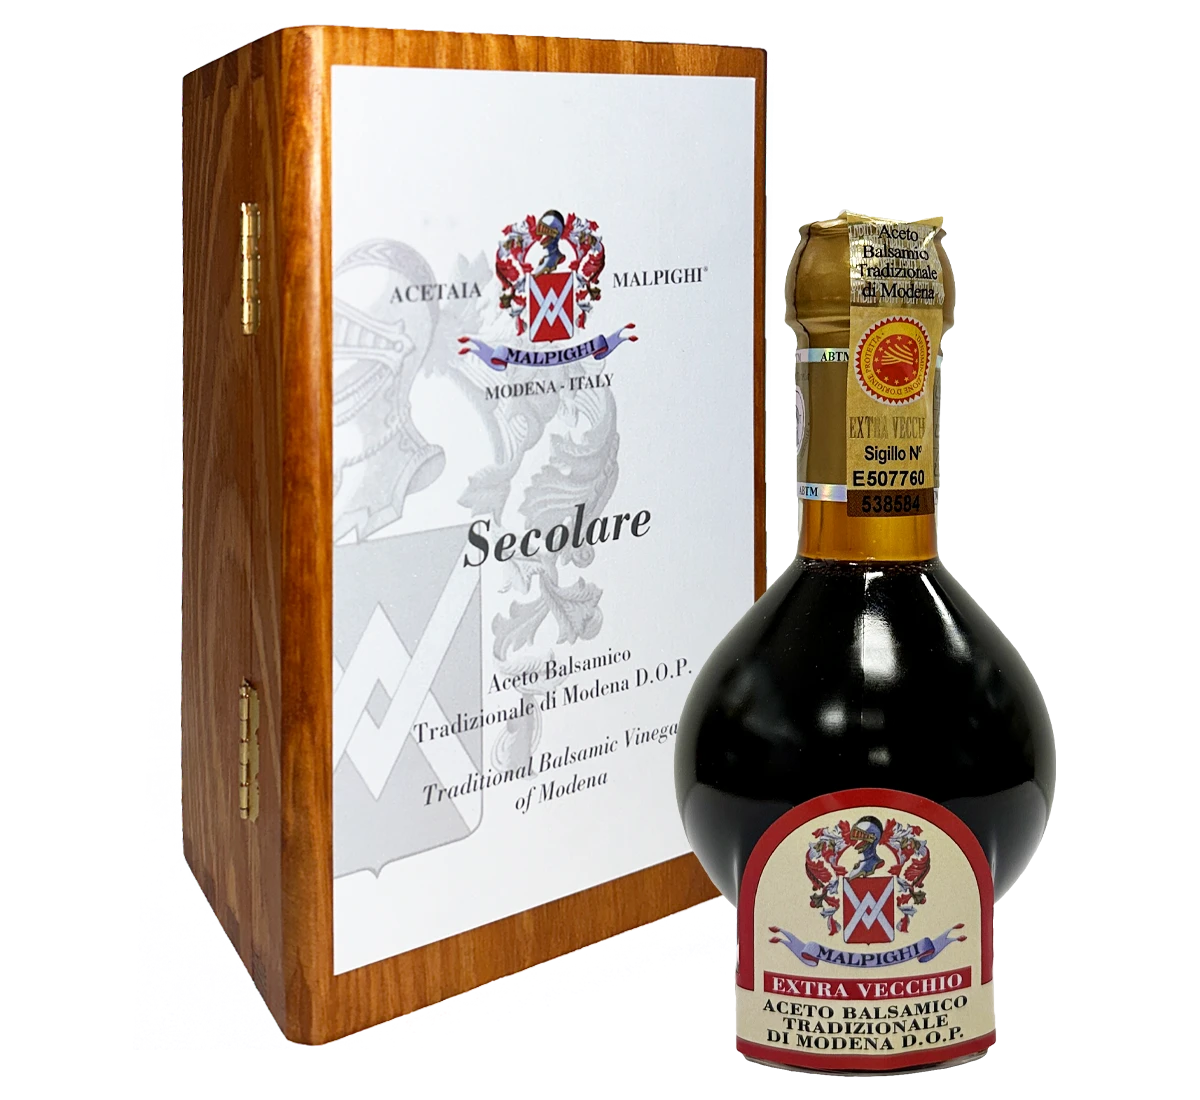 Traditional Balsamic Vinegar of Modena PDO - Extra Vecchio - "Secolare" (100 ml. / 3.38 fl. oz.)